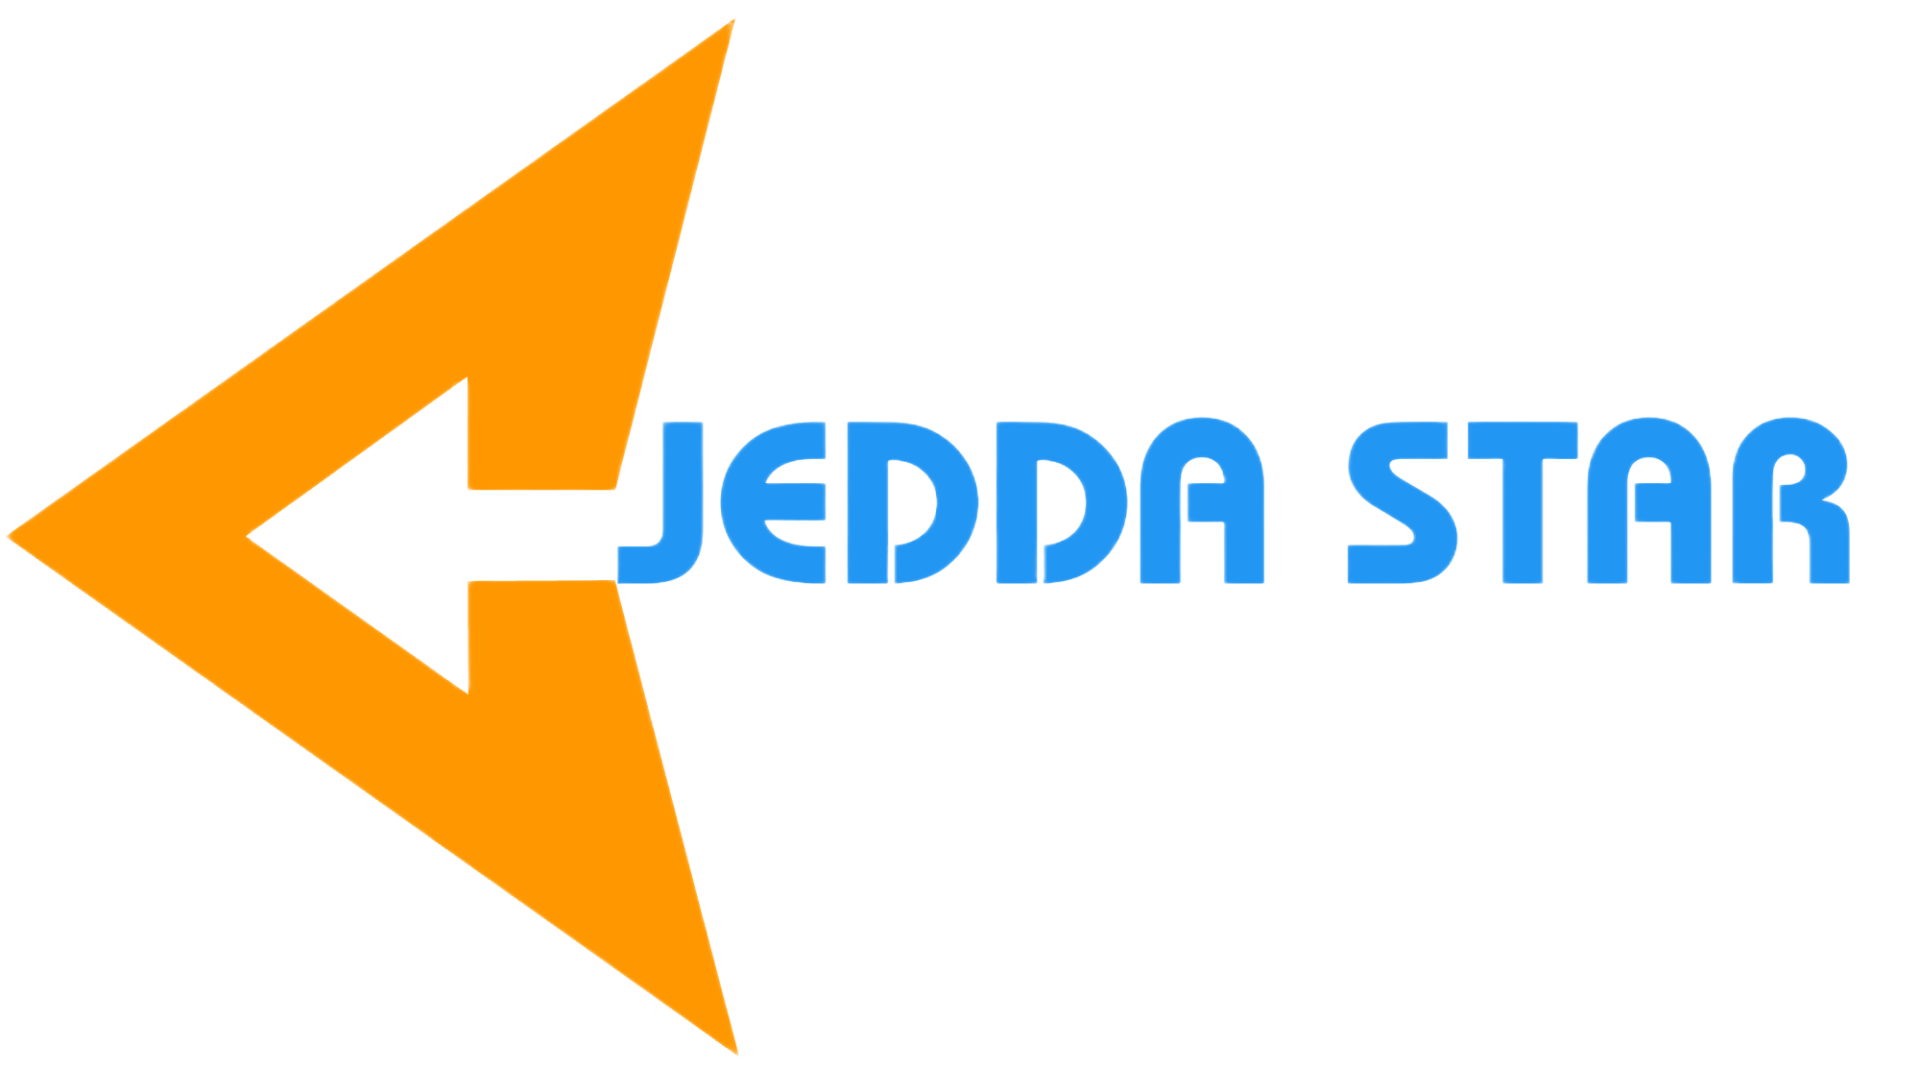 JEDDA STAR